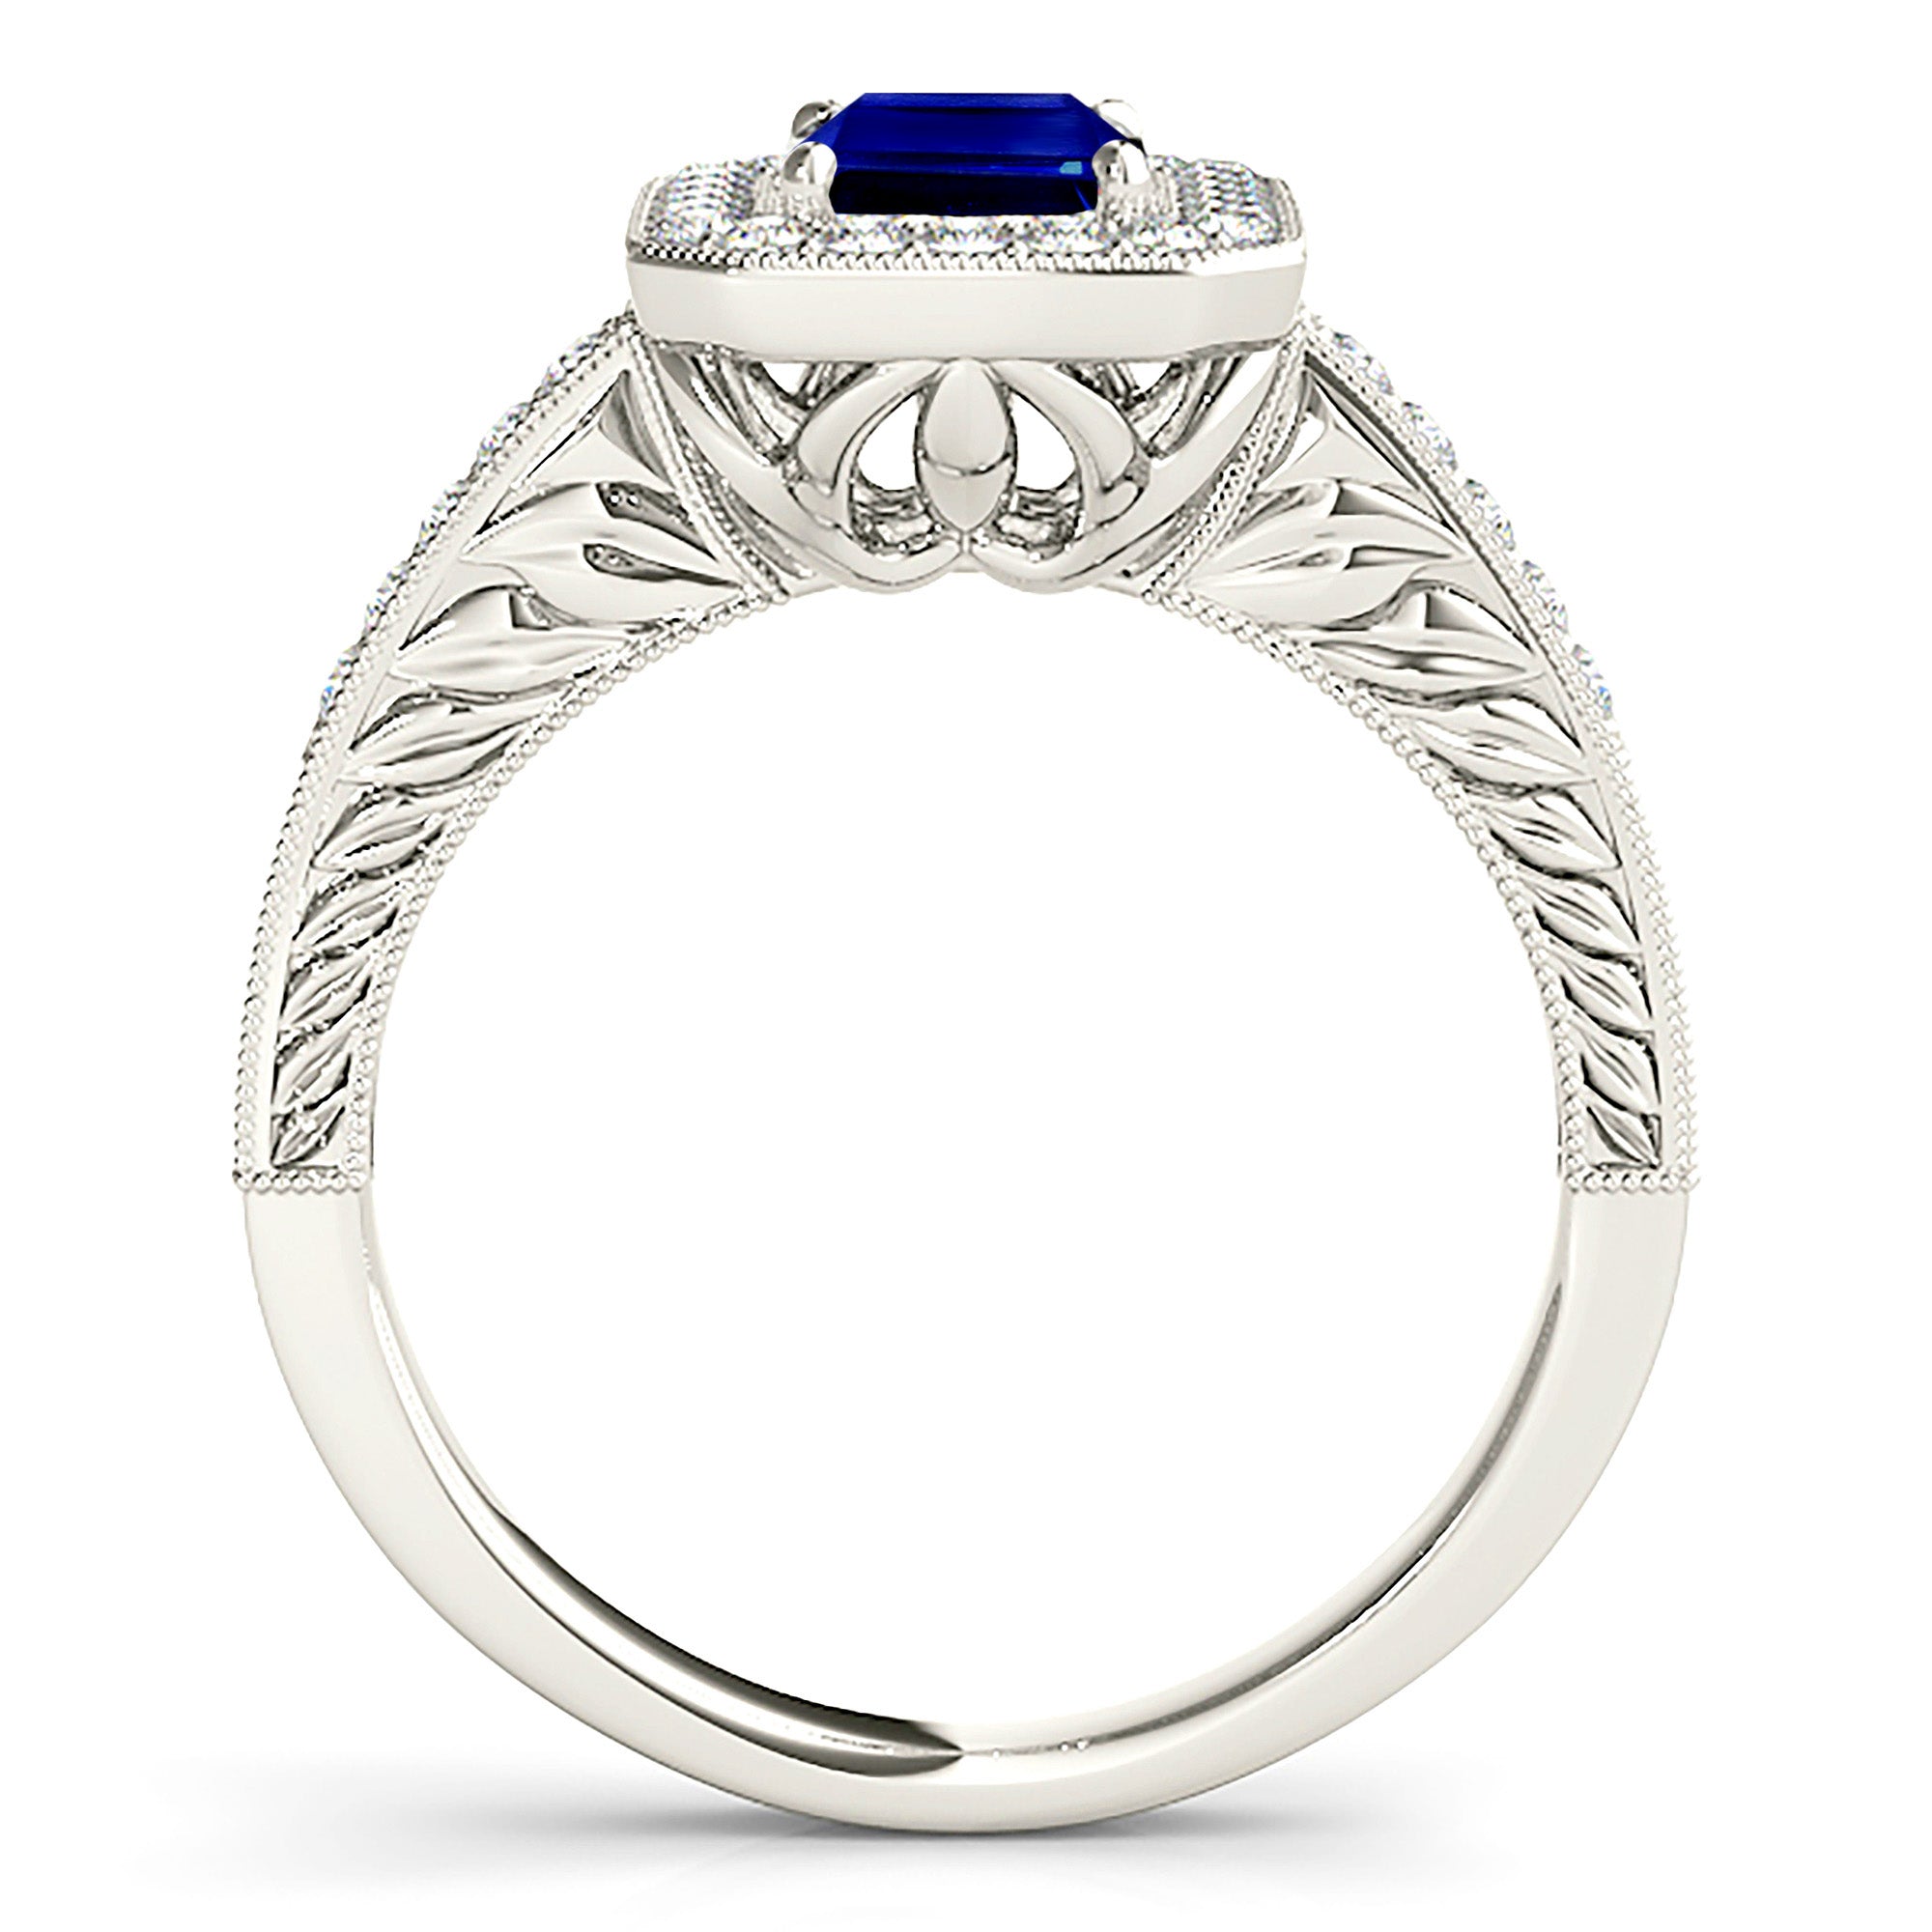 1.15 ct. Genuine Blue Emerald Cut Sapphire Ring With 0.35 ctw. Diamond Milgrain Halo, Filigree Band | Natural Sapphire And Diamond Ring-in 14K/18K White, Yellow, Rose Gold and Platinum - Christmas Jewelry Gift -VIRABYANI